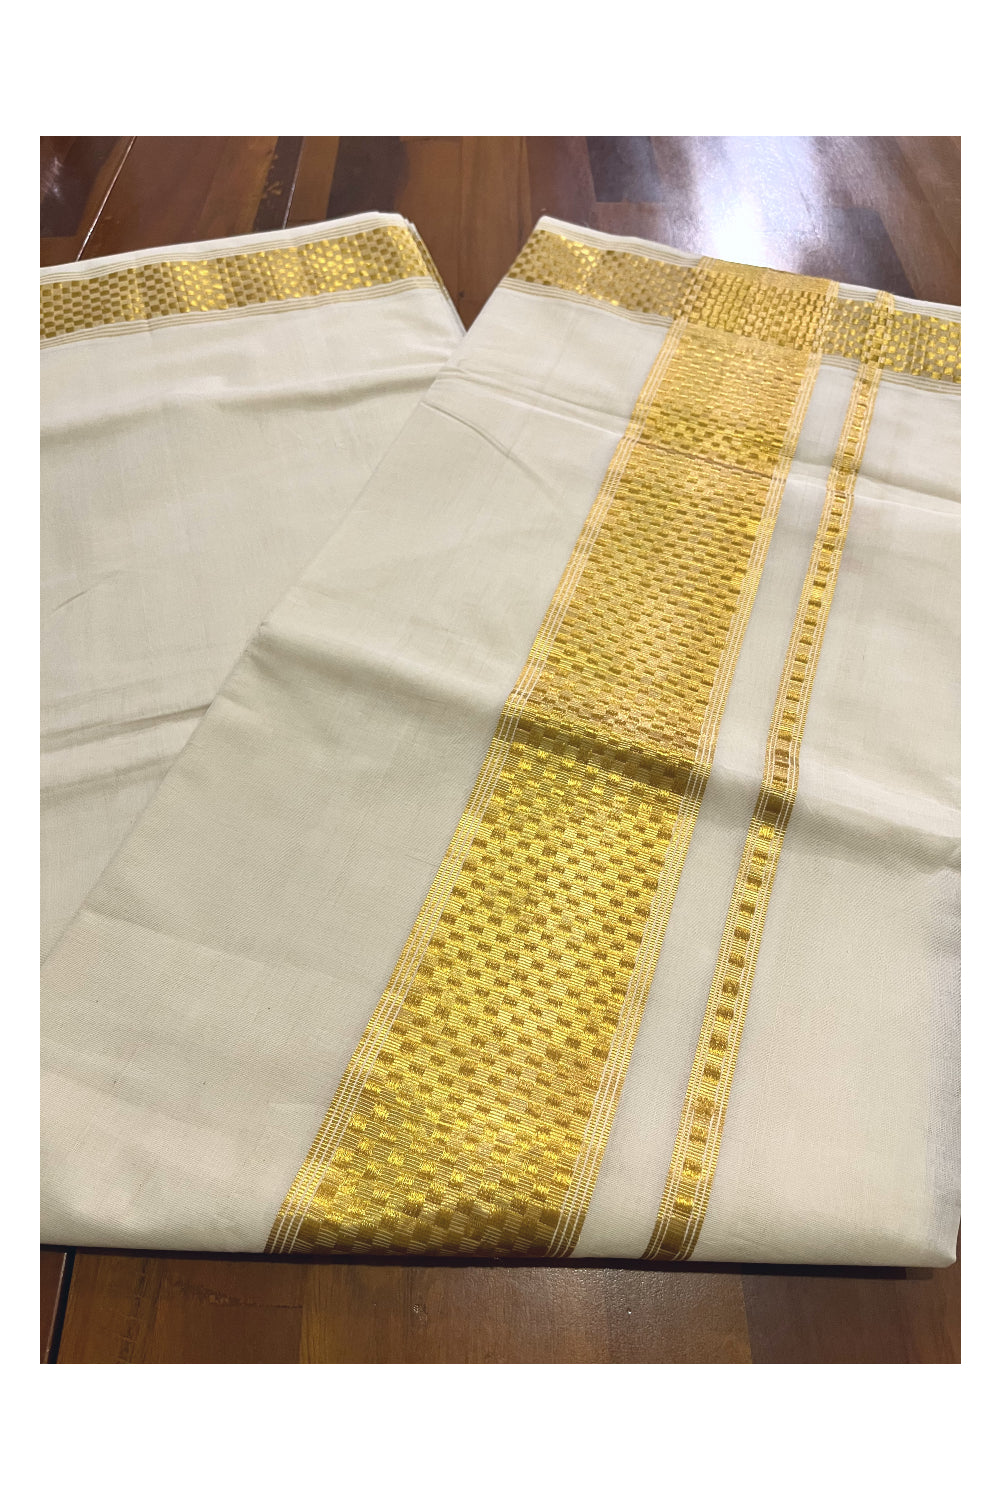 Southloom Handloom Premium Kerala Cotton Saree with Kasavu Paa Neythu Border